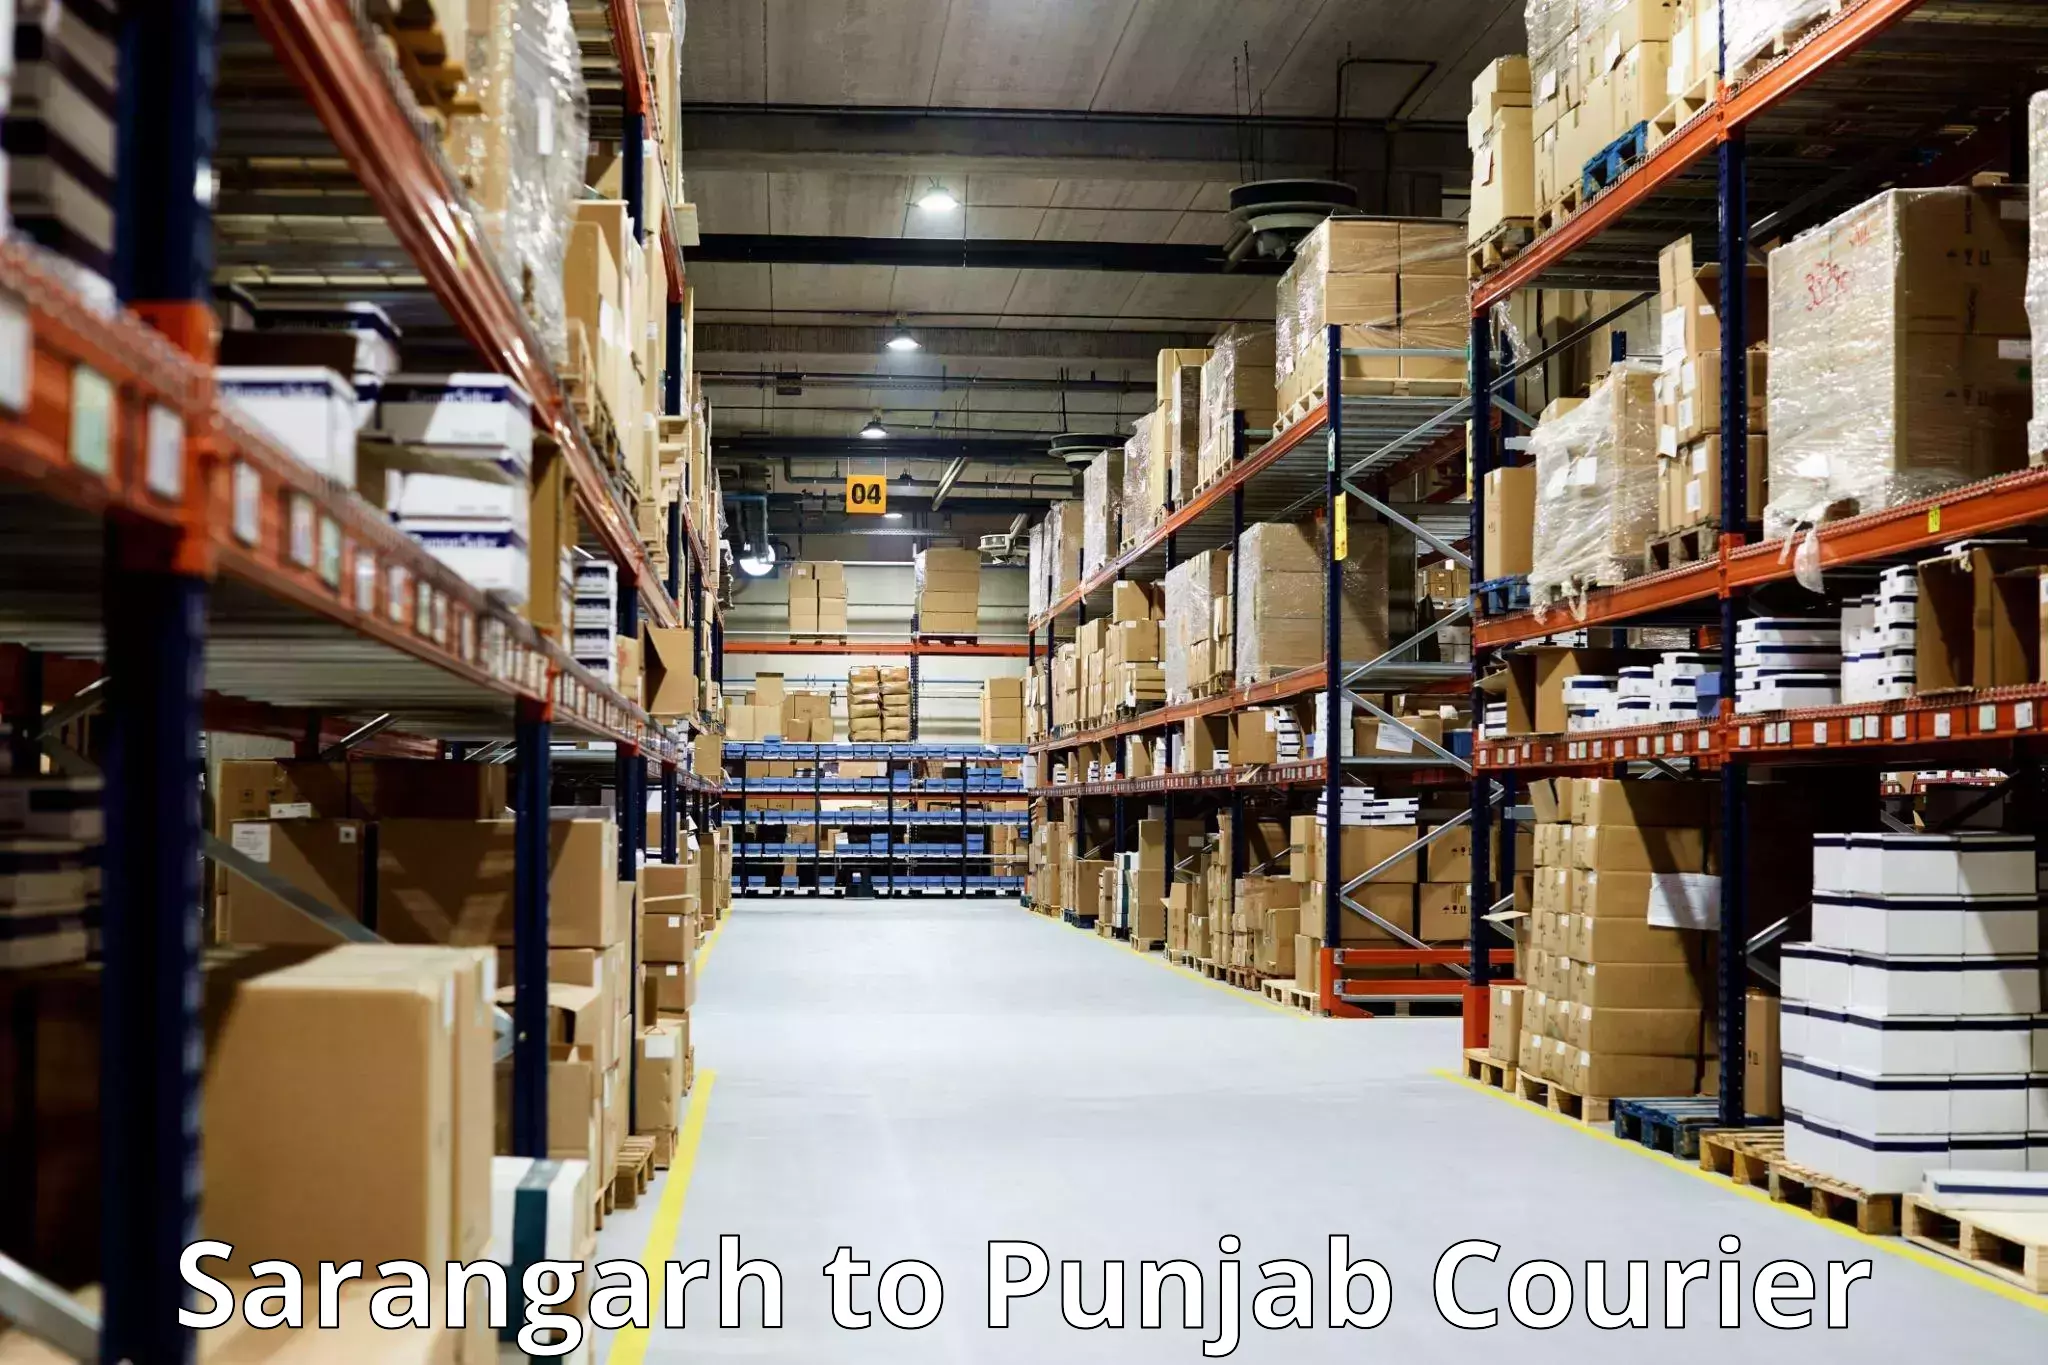 Luggage transport company Sarangarh to Punjab